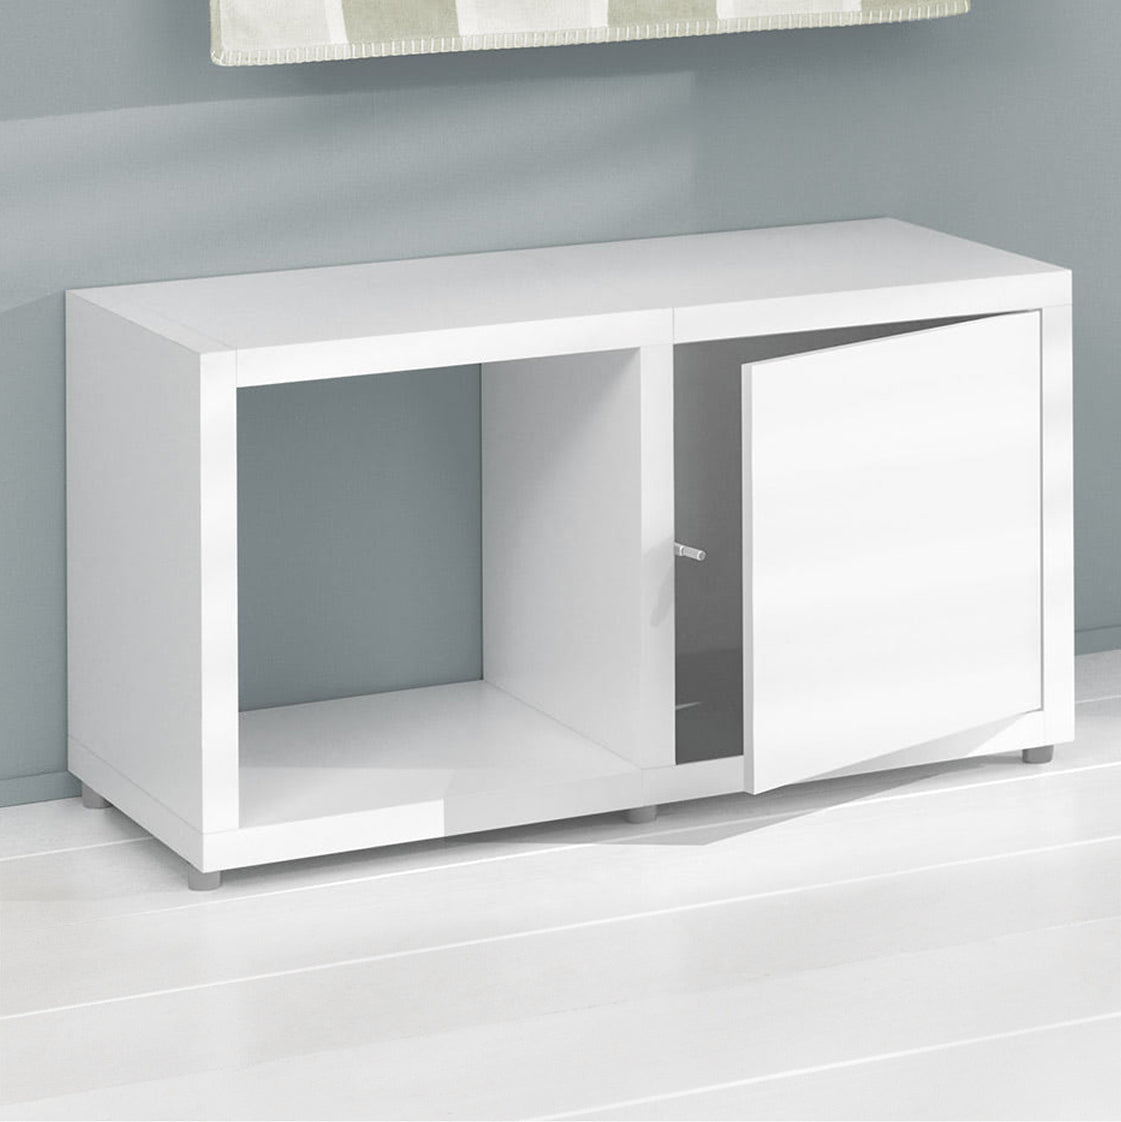 BOON Cube Storage Shelf Combo 2/1x1 Accessorized